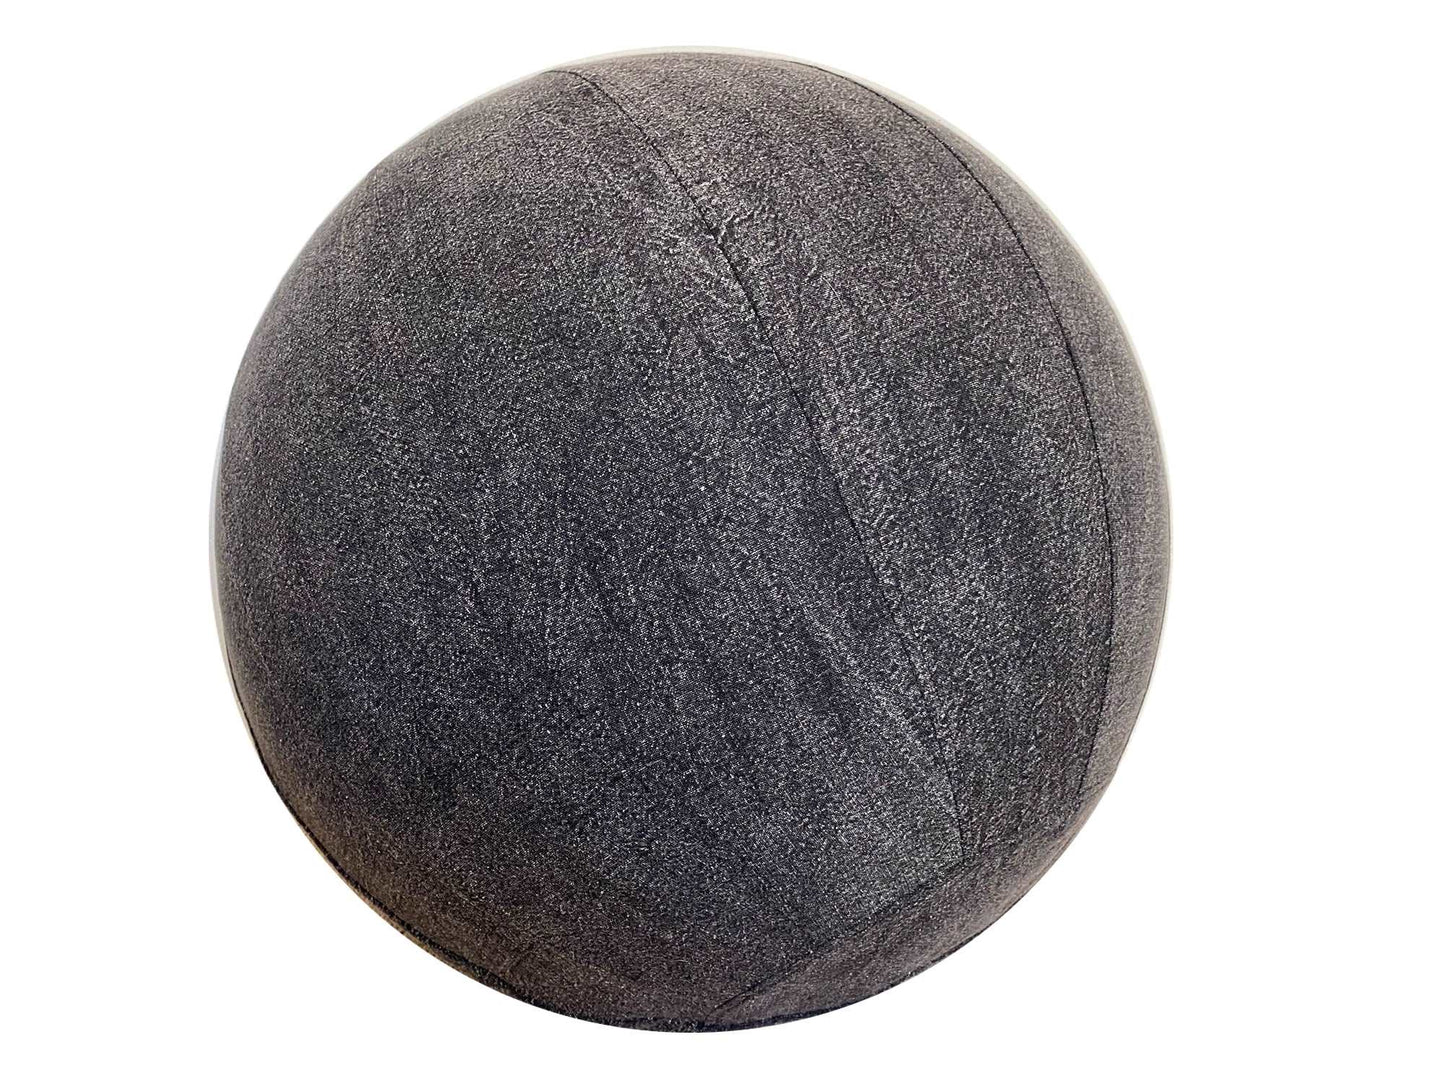 65cm Balance Ball / Yoga Ball Cover: Black Stonewash